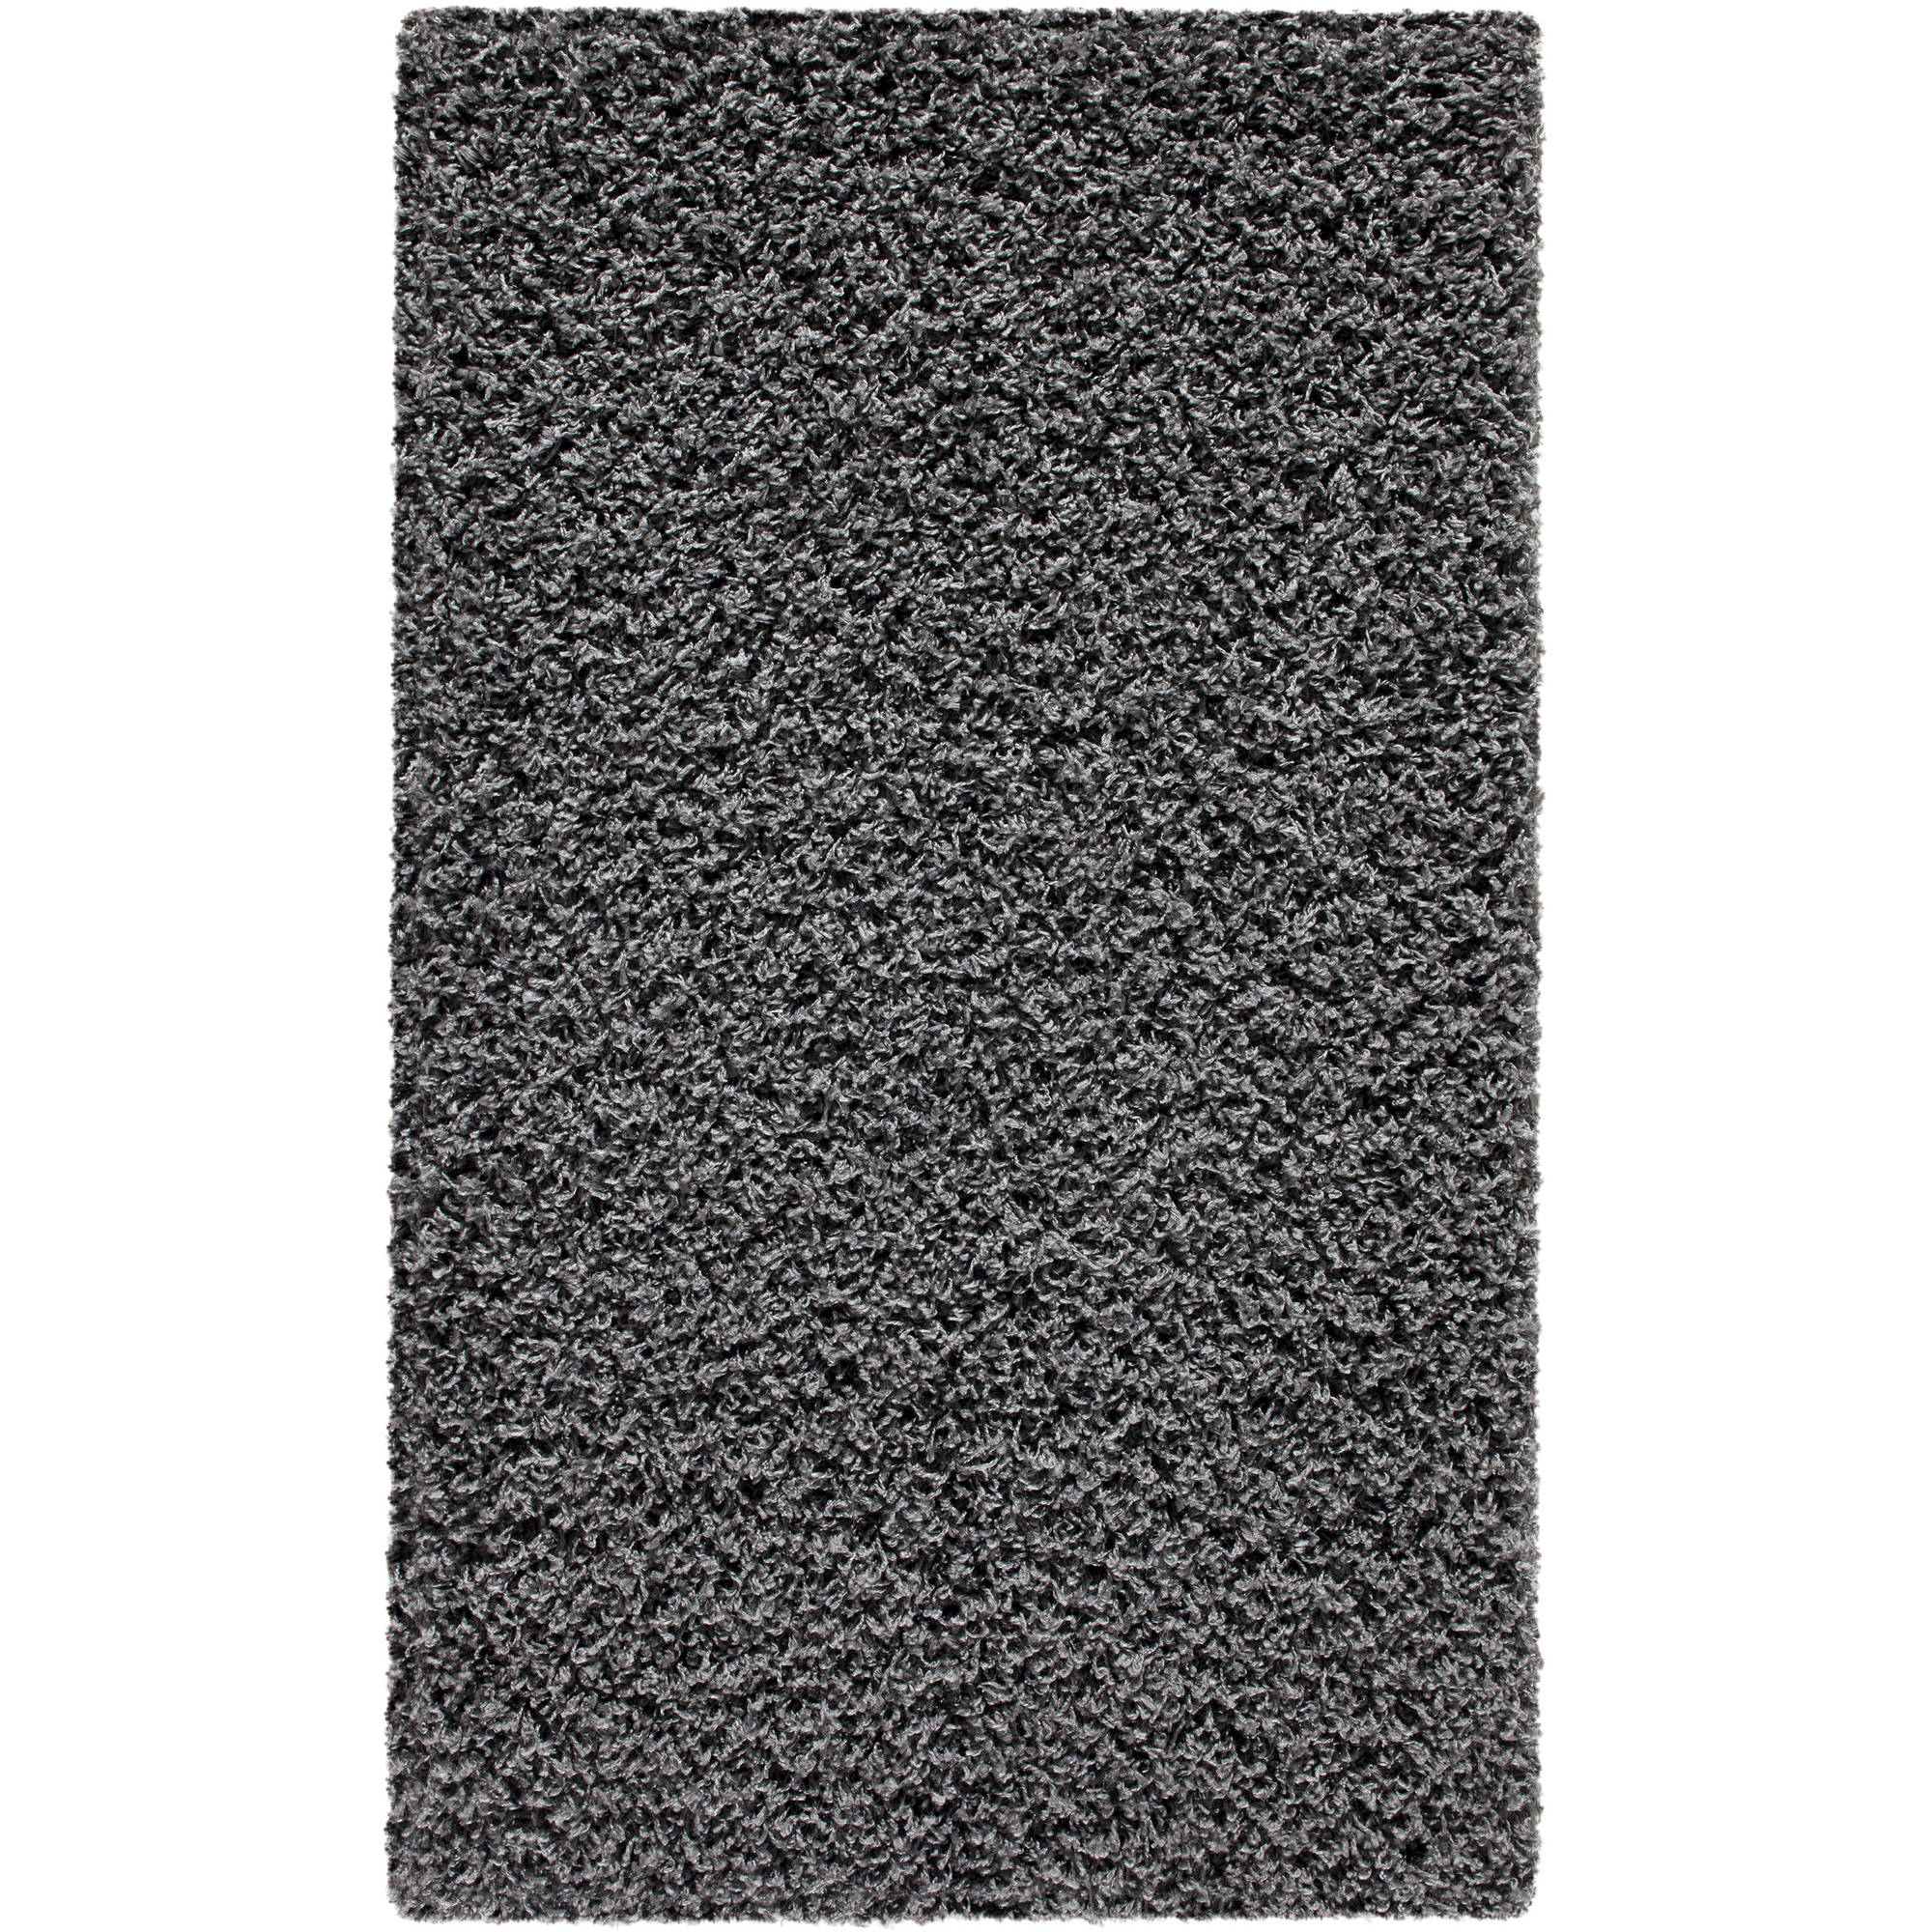 shaggy rugs mainstays polyester shag area rugs or runner FYLJKAI